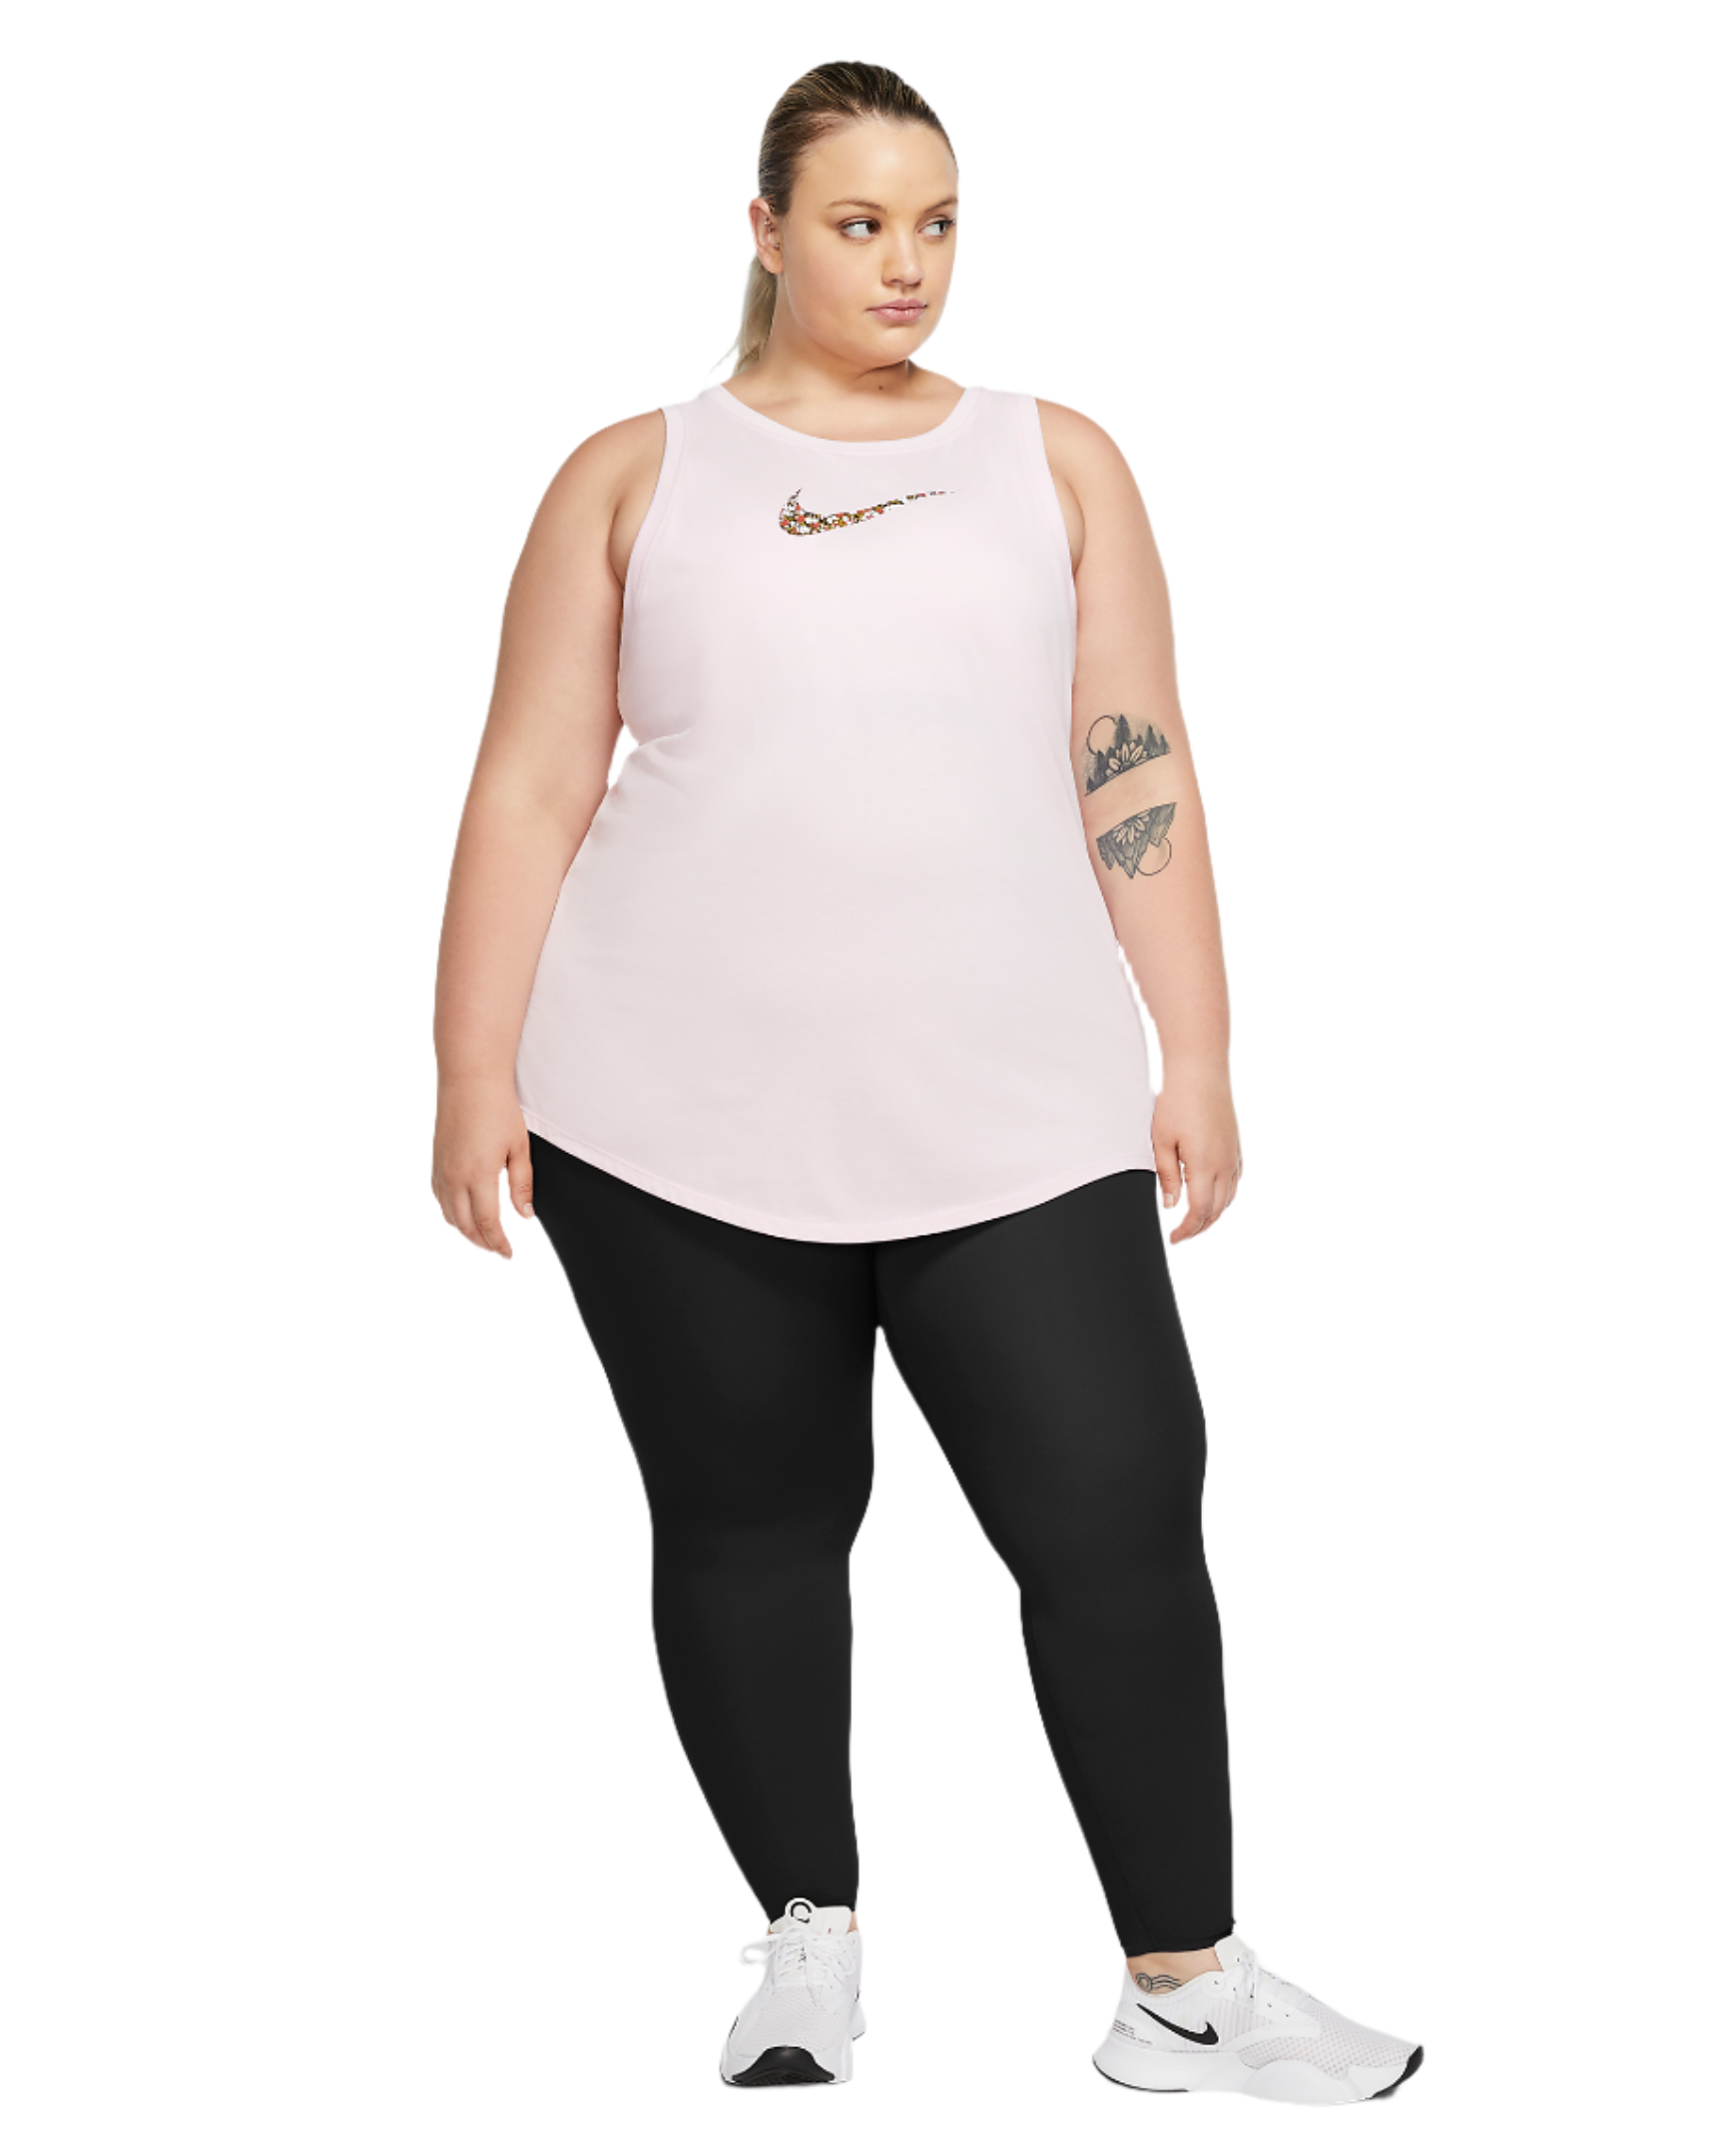 Nike One Luxe Women's Tight - Black